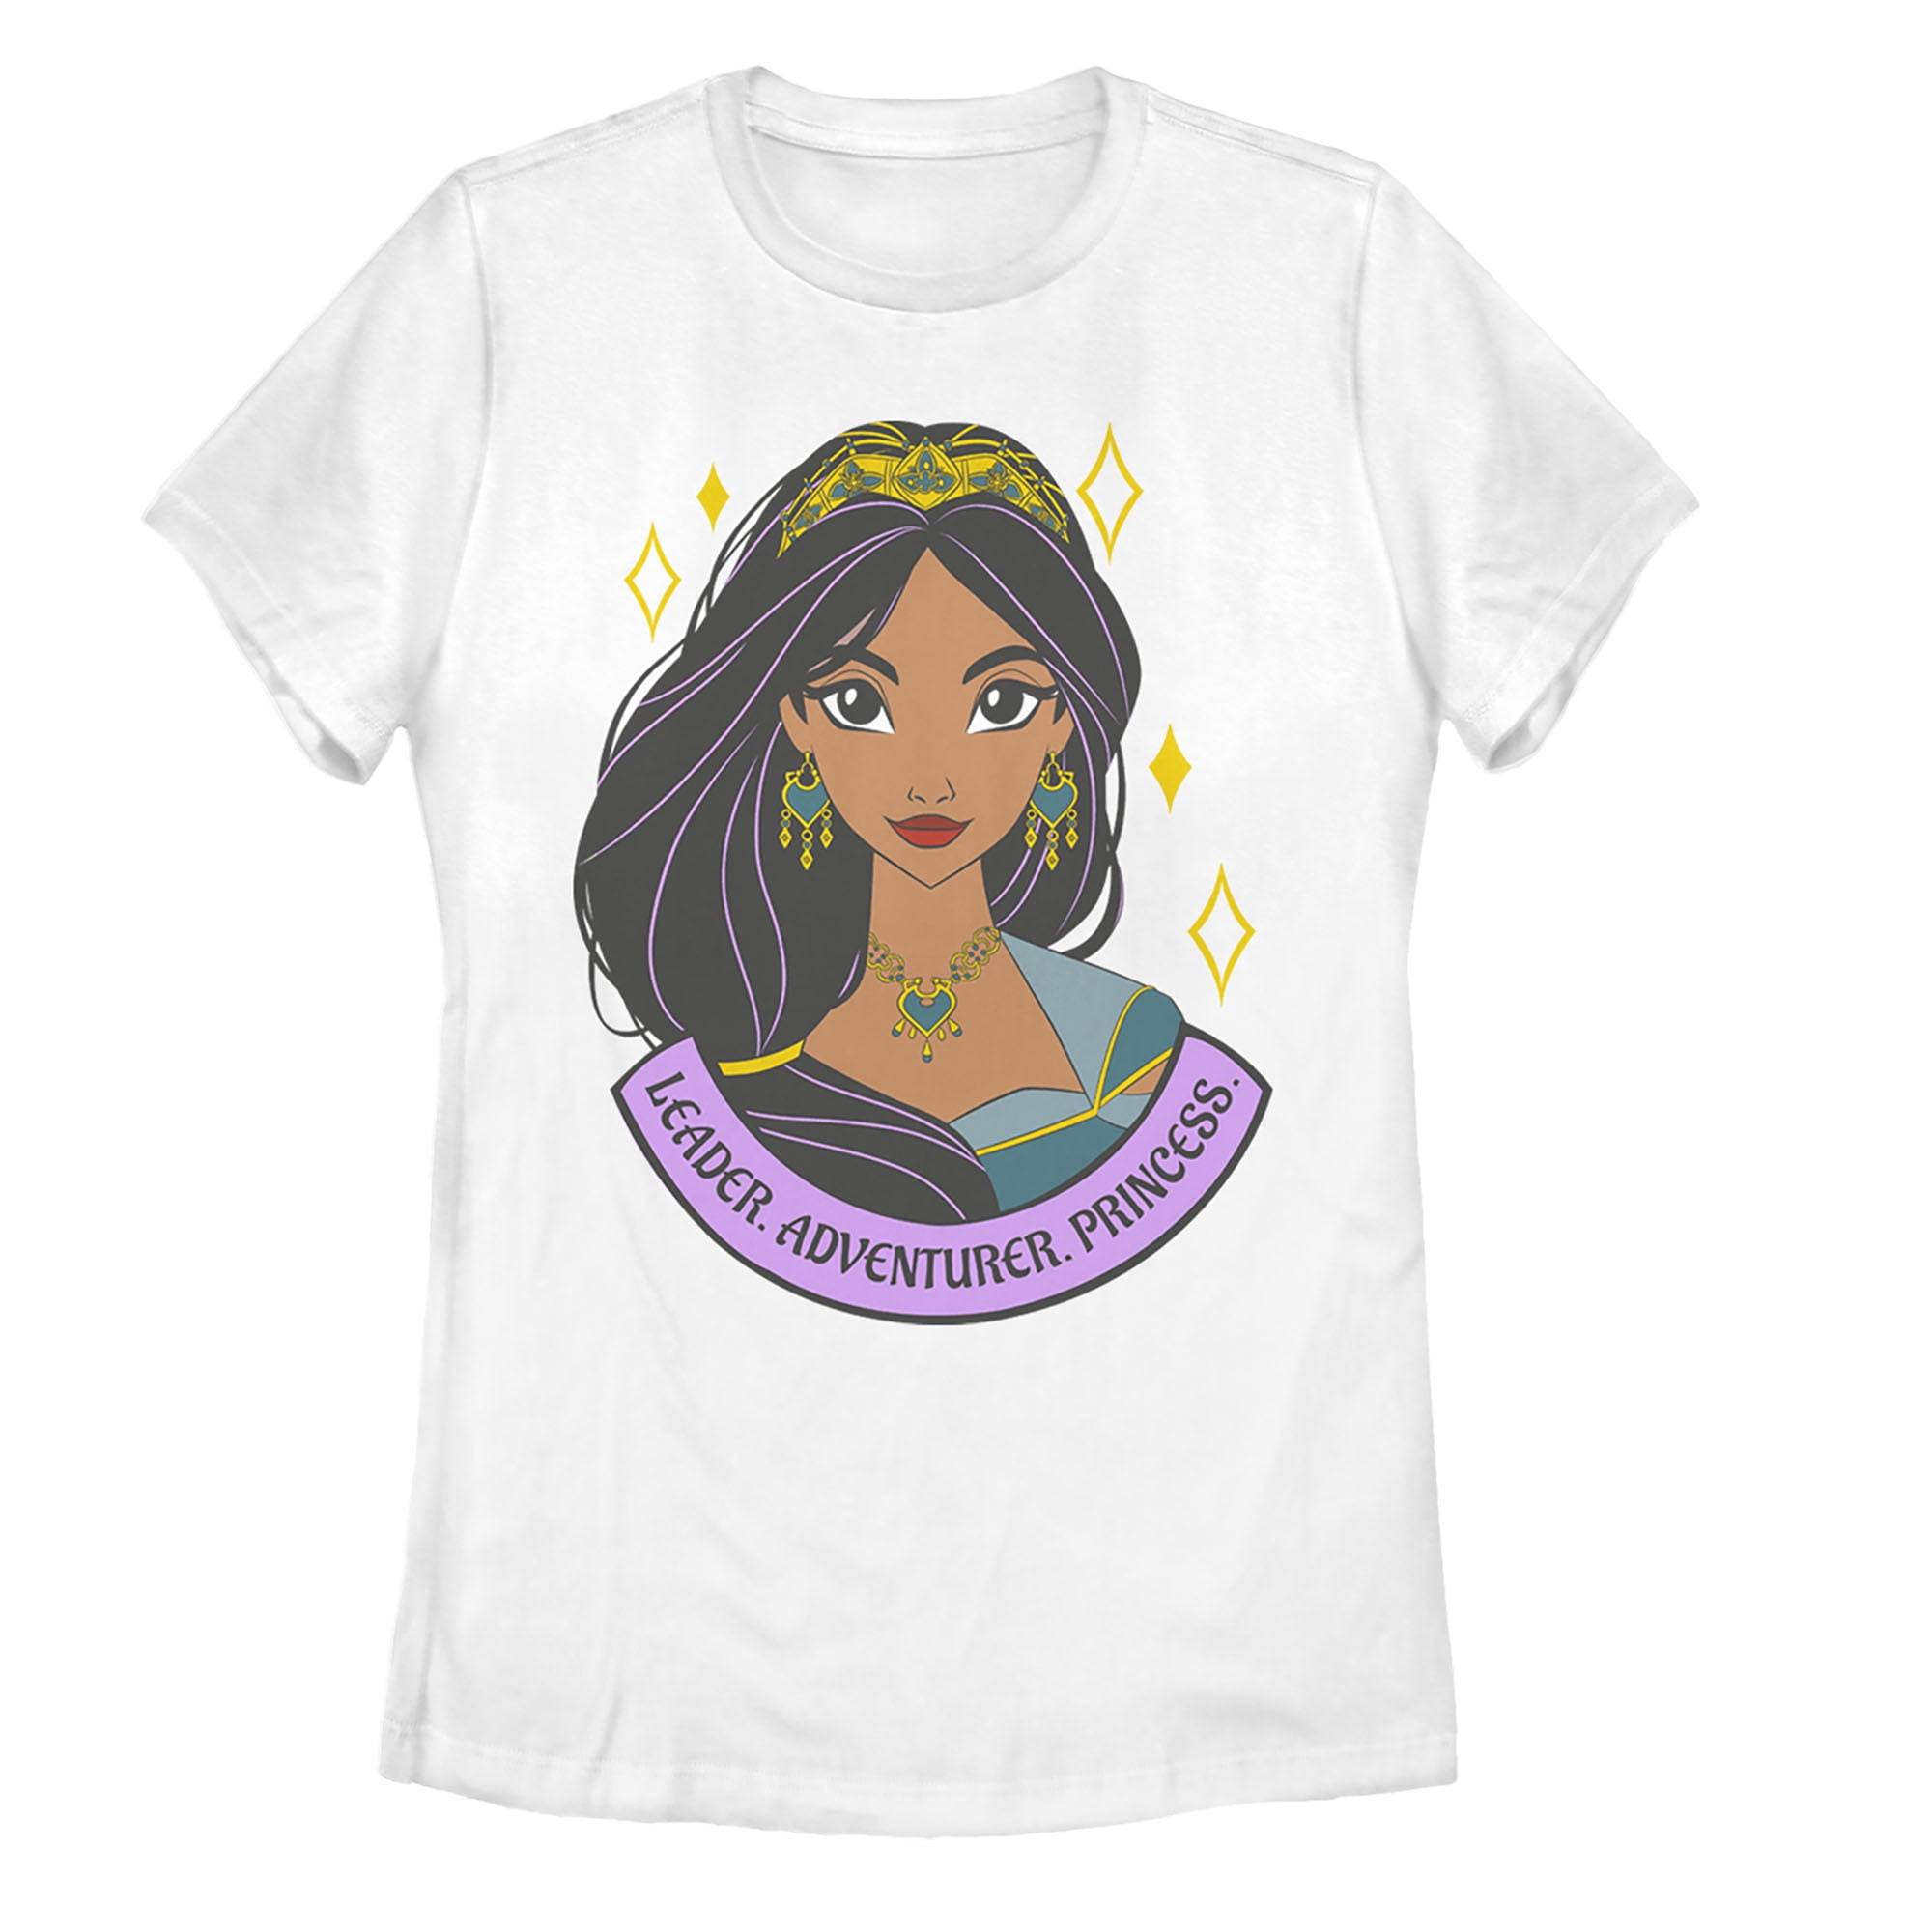 Disney Aladdin Live Action Jasmine Face Portrait Sketch Sweatshirt